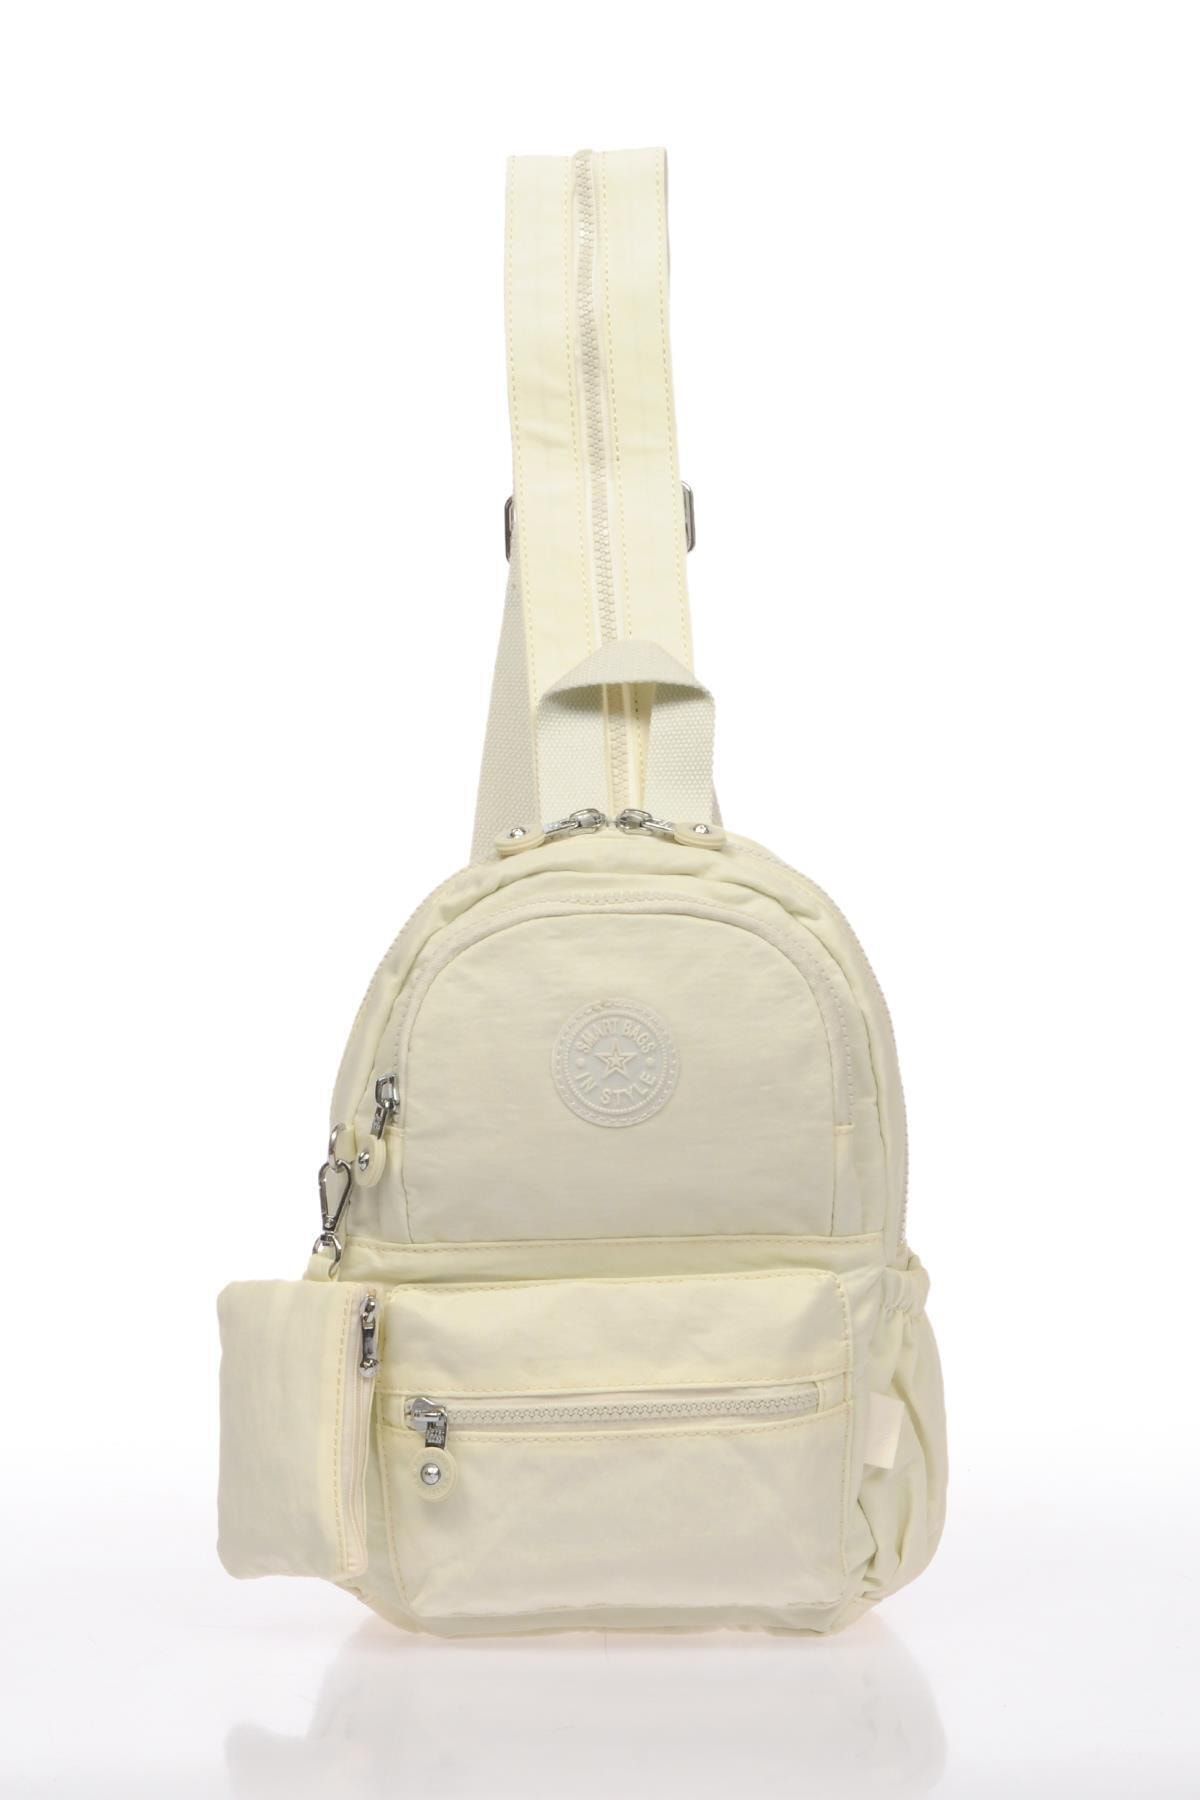 Smart Bags Smb1030-0002 Beyaz Kadın Küçük Sırt Çantası